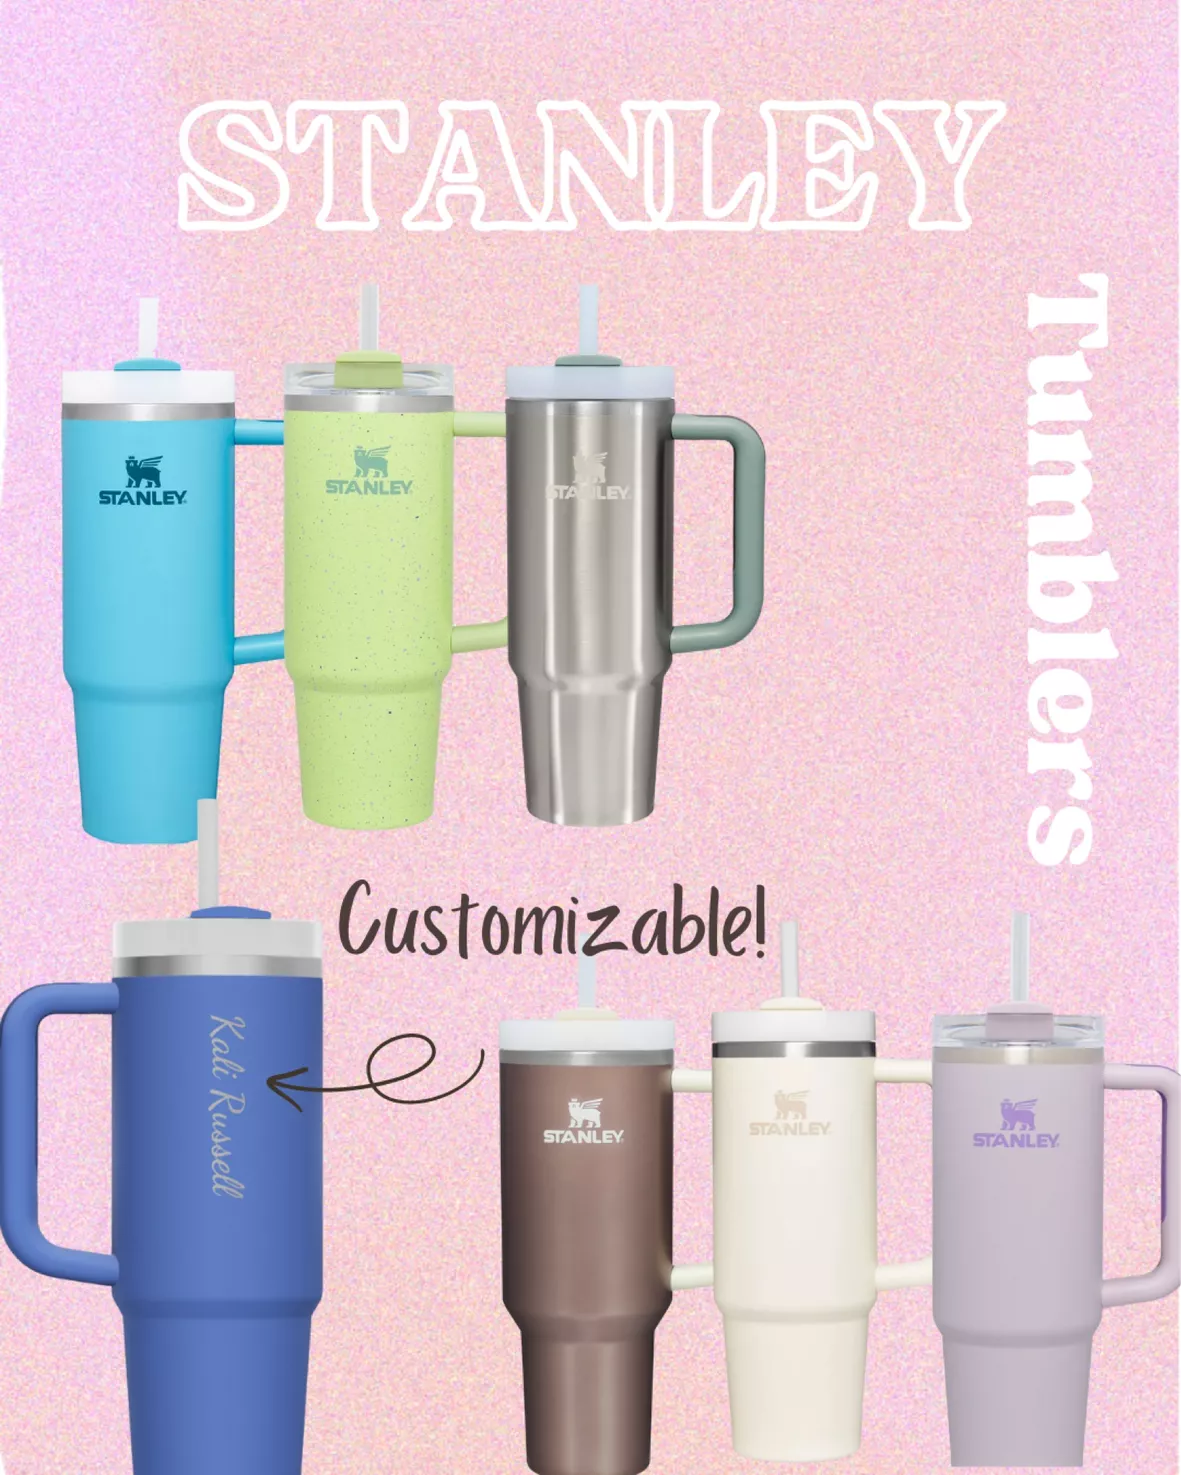 Stanley 30 oz Tumbler with handle